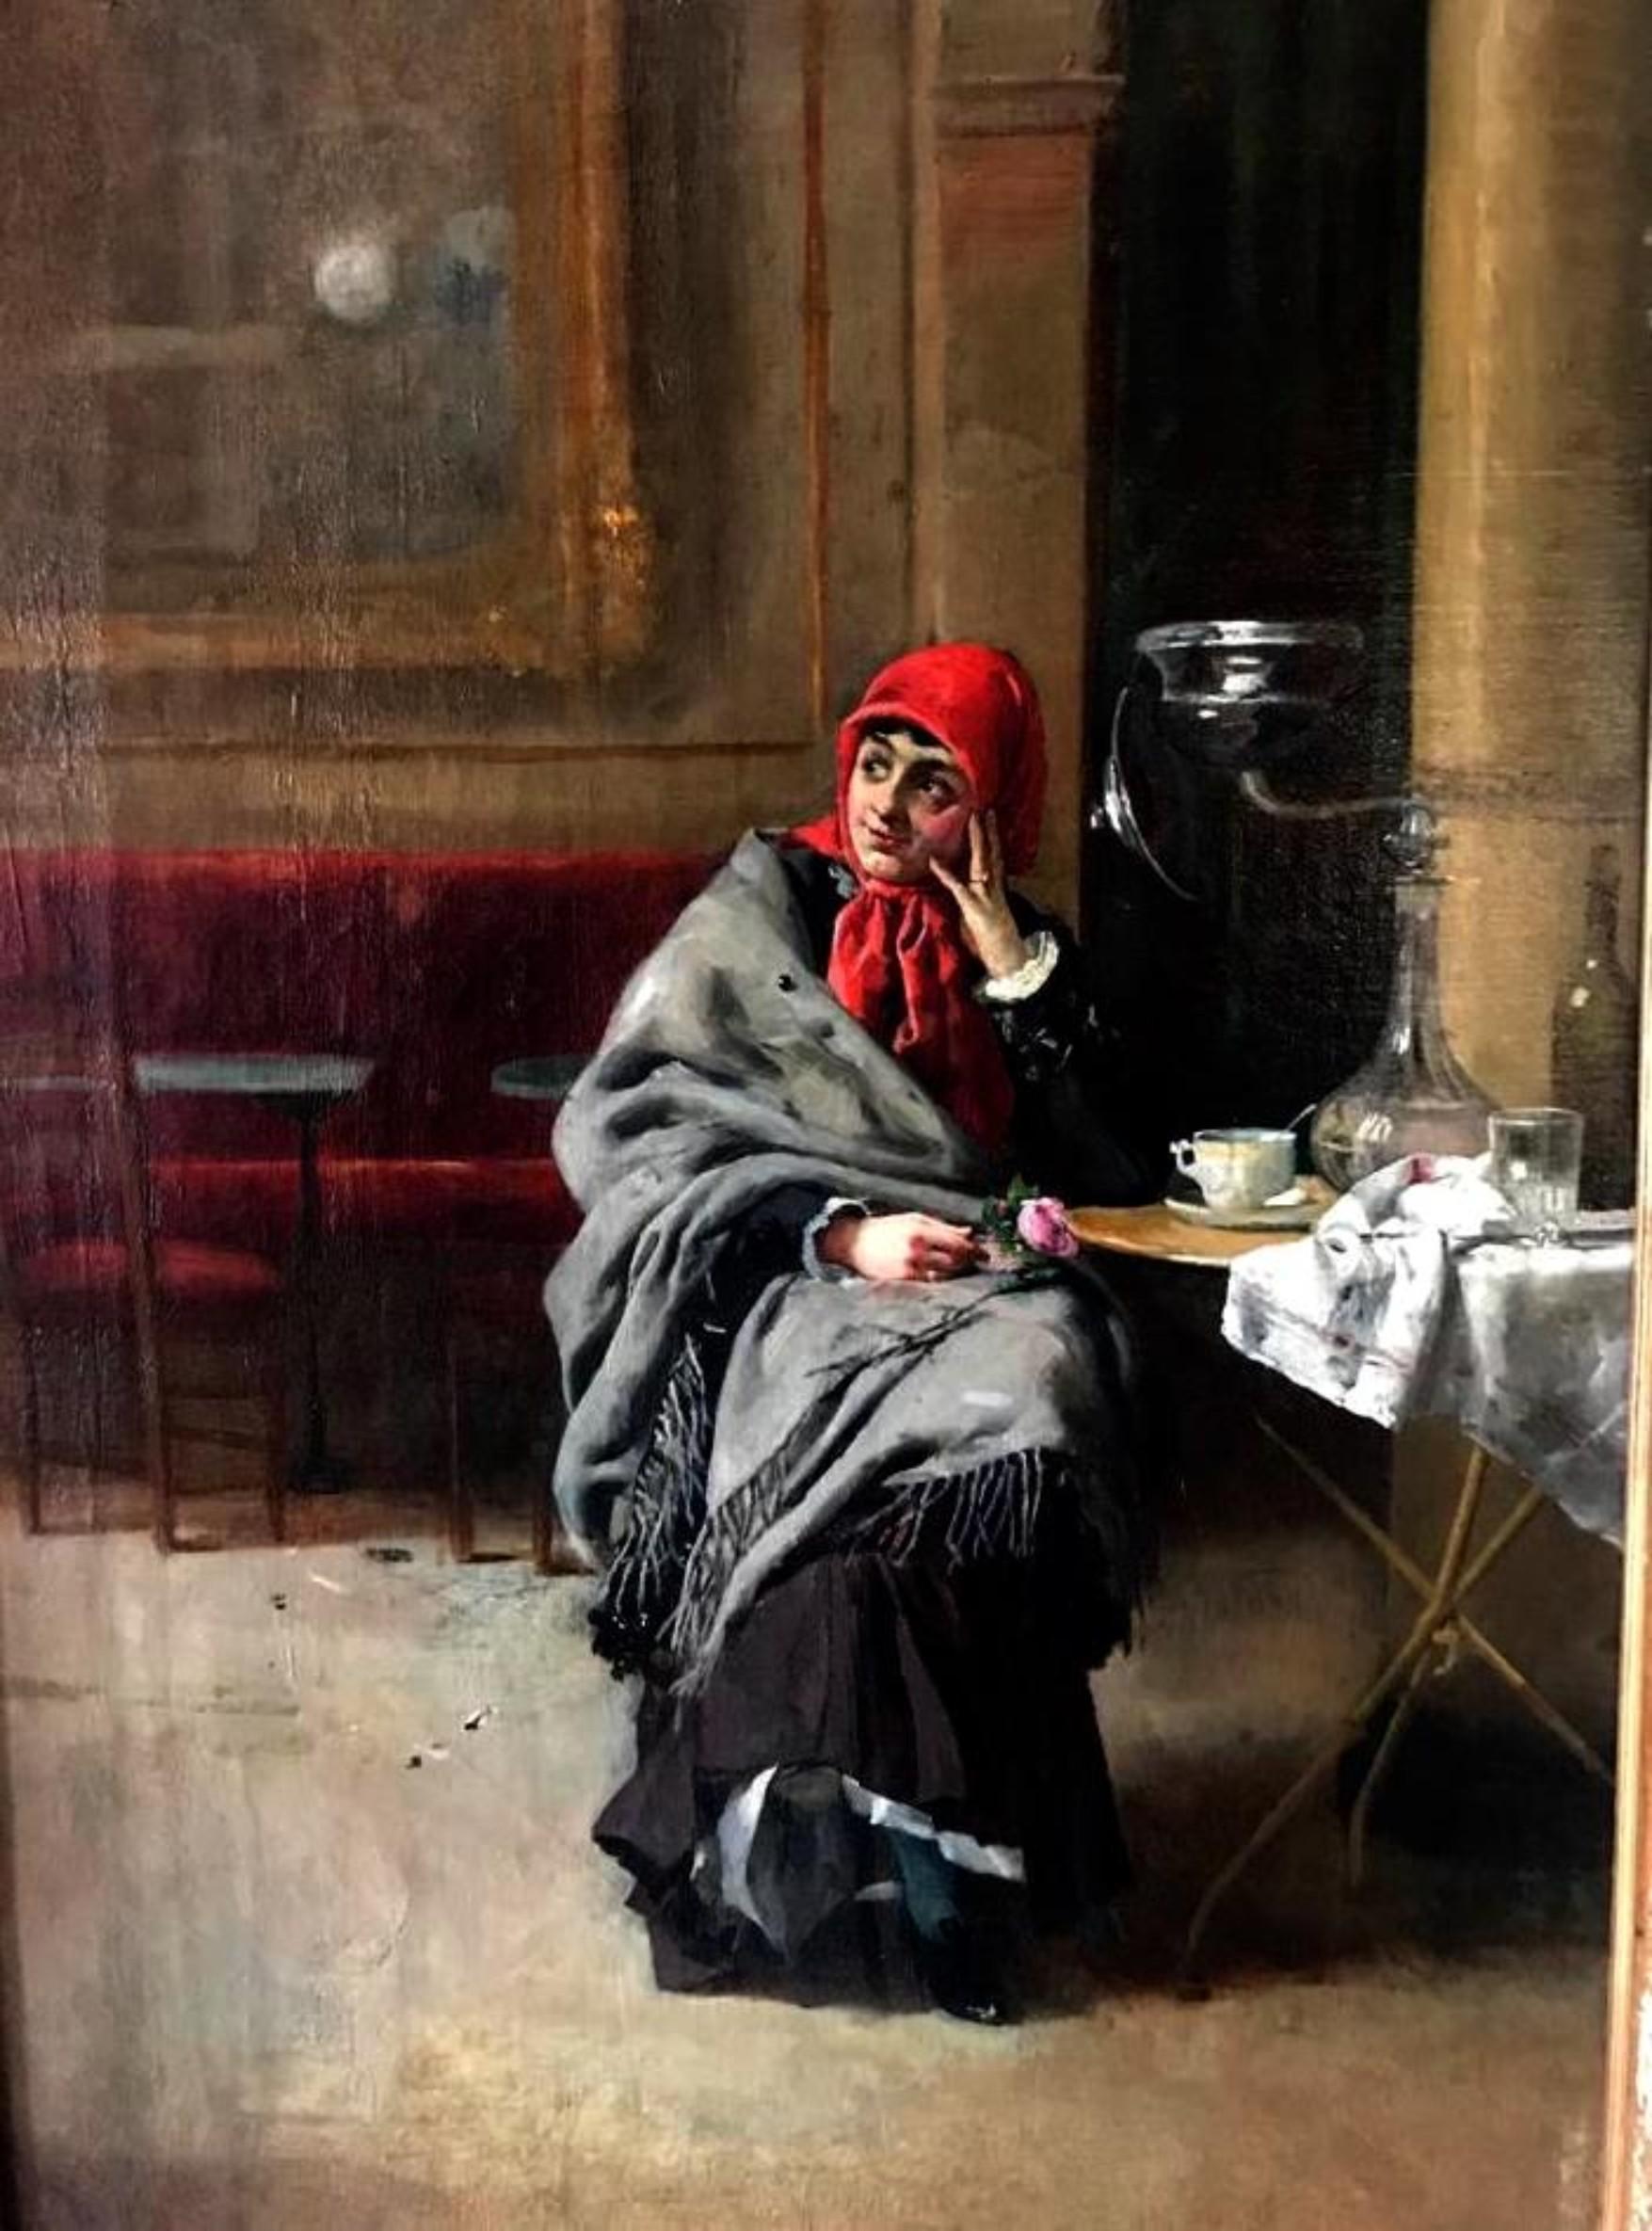 Luis Franco y Salinas Portrait Painting - Gypsy with a rose